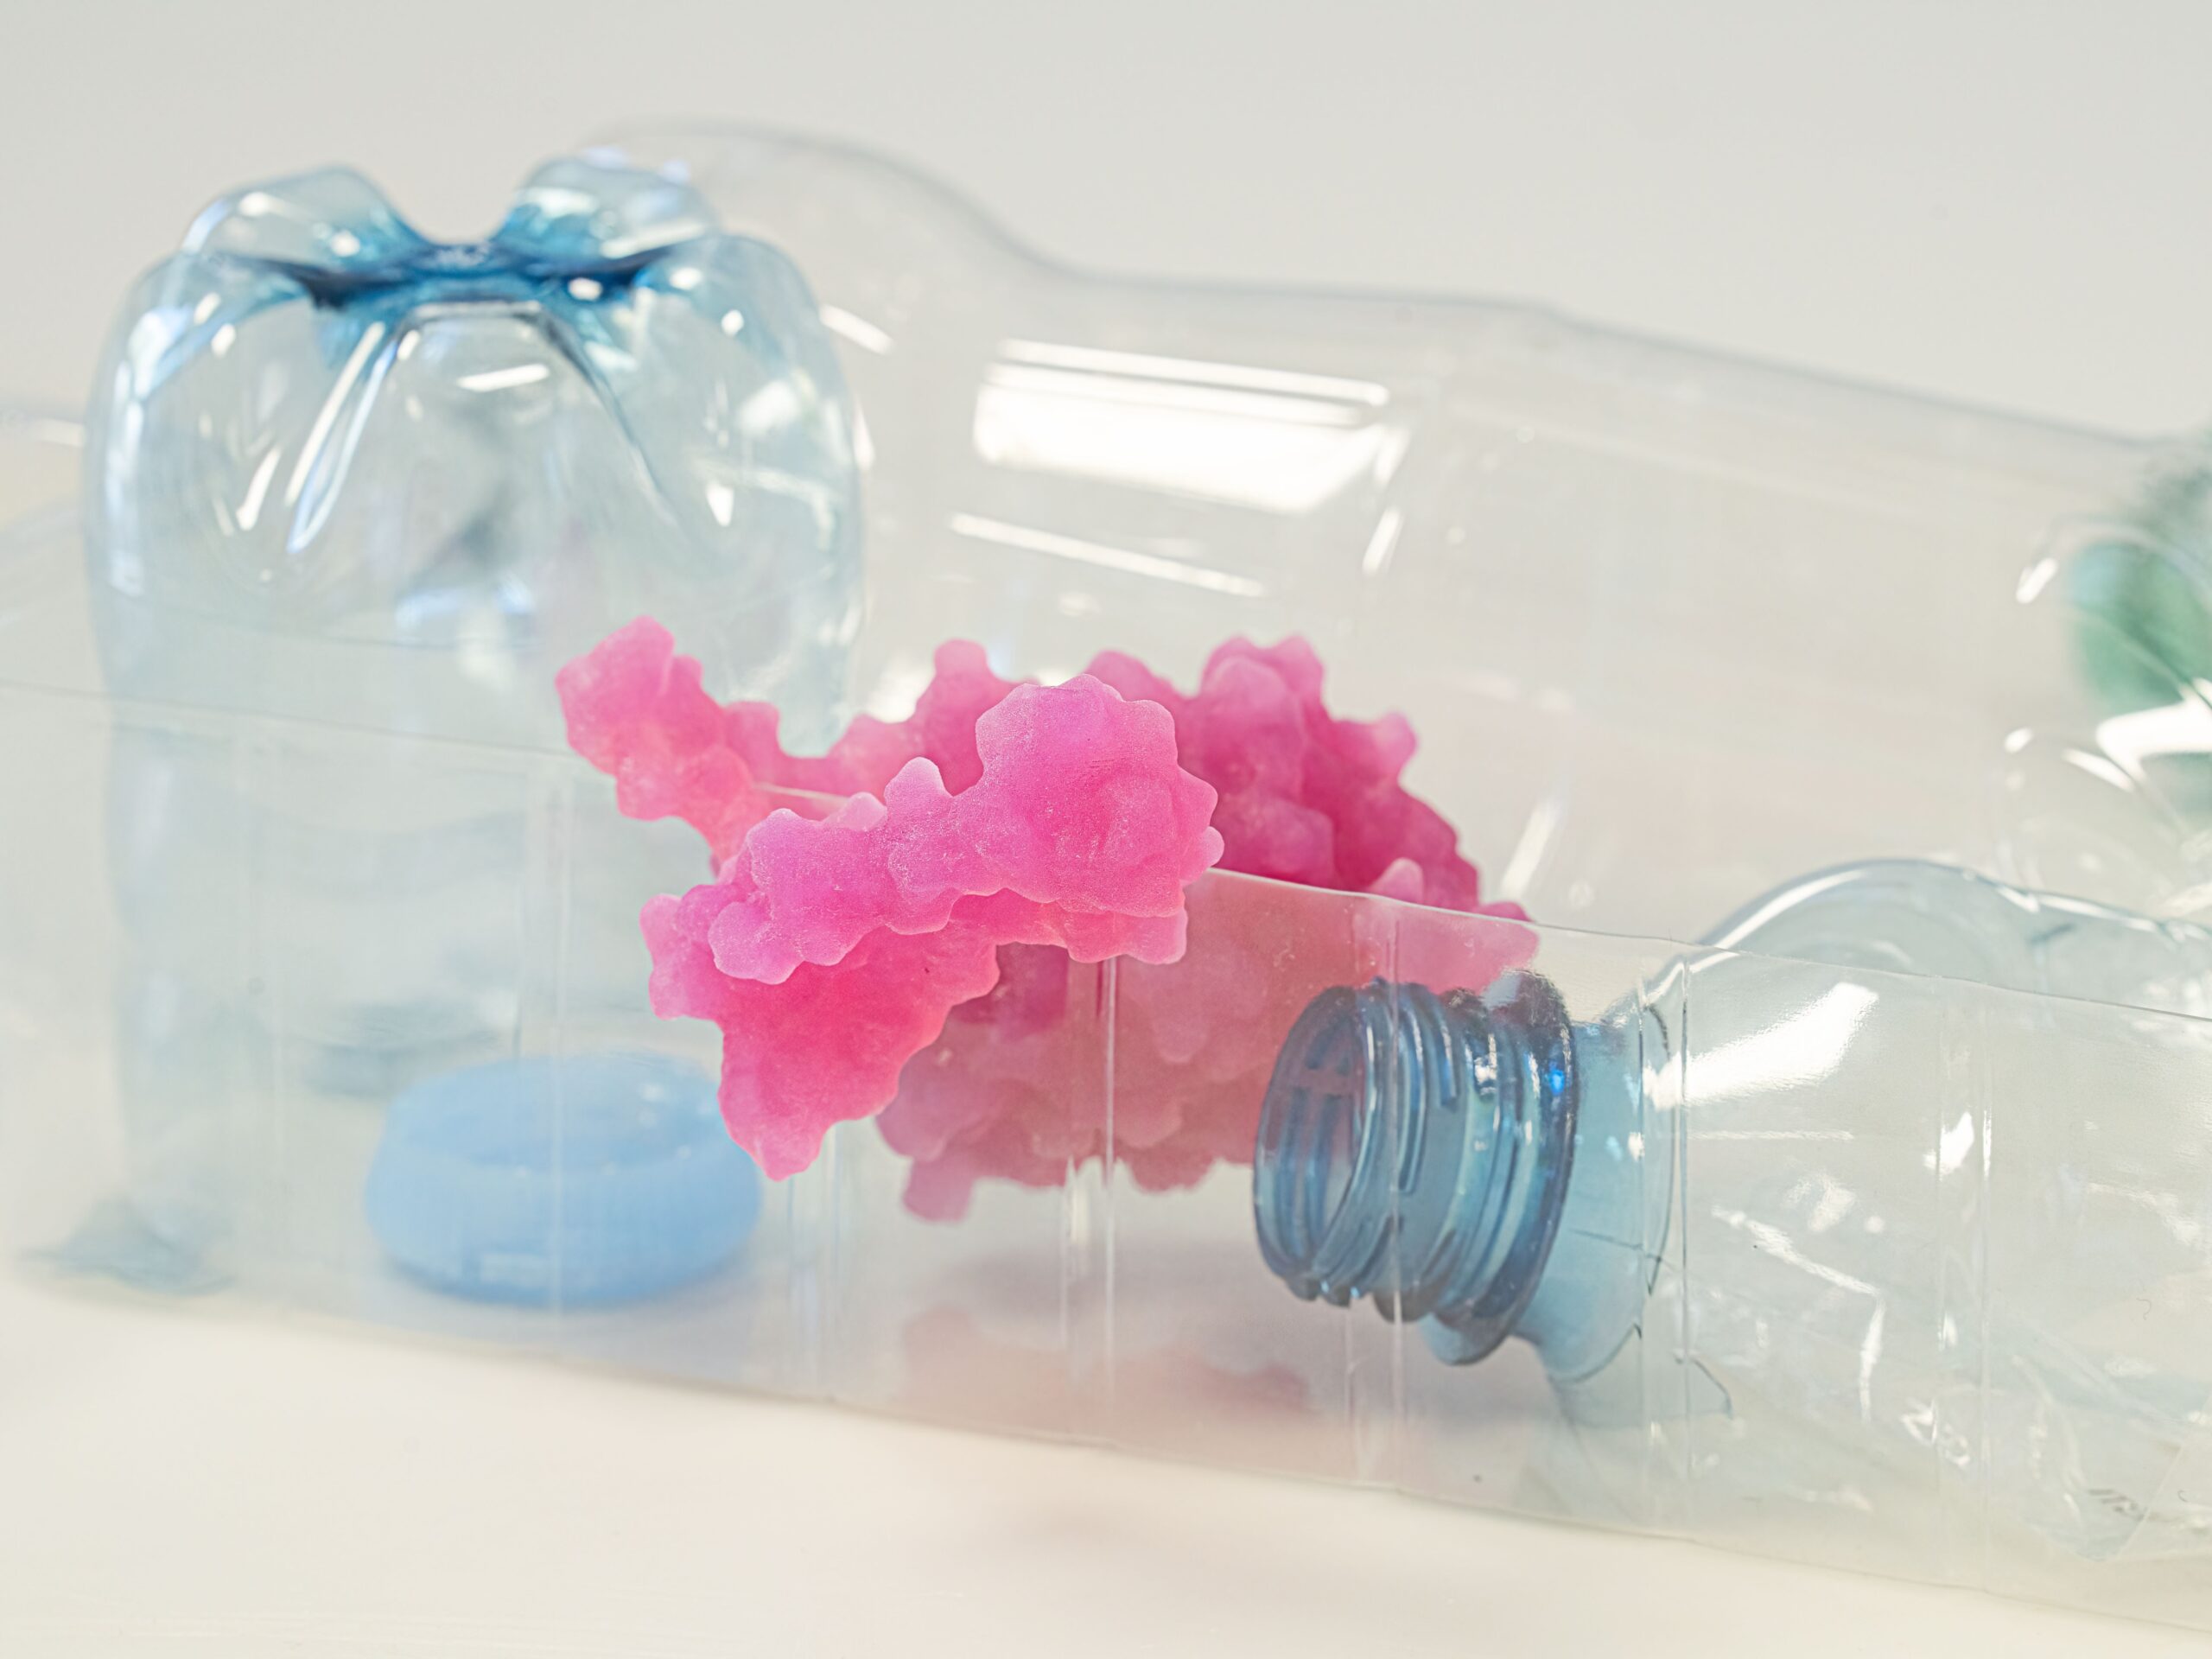 Enzyme degrades plastic bottle